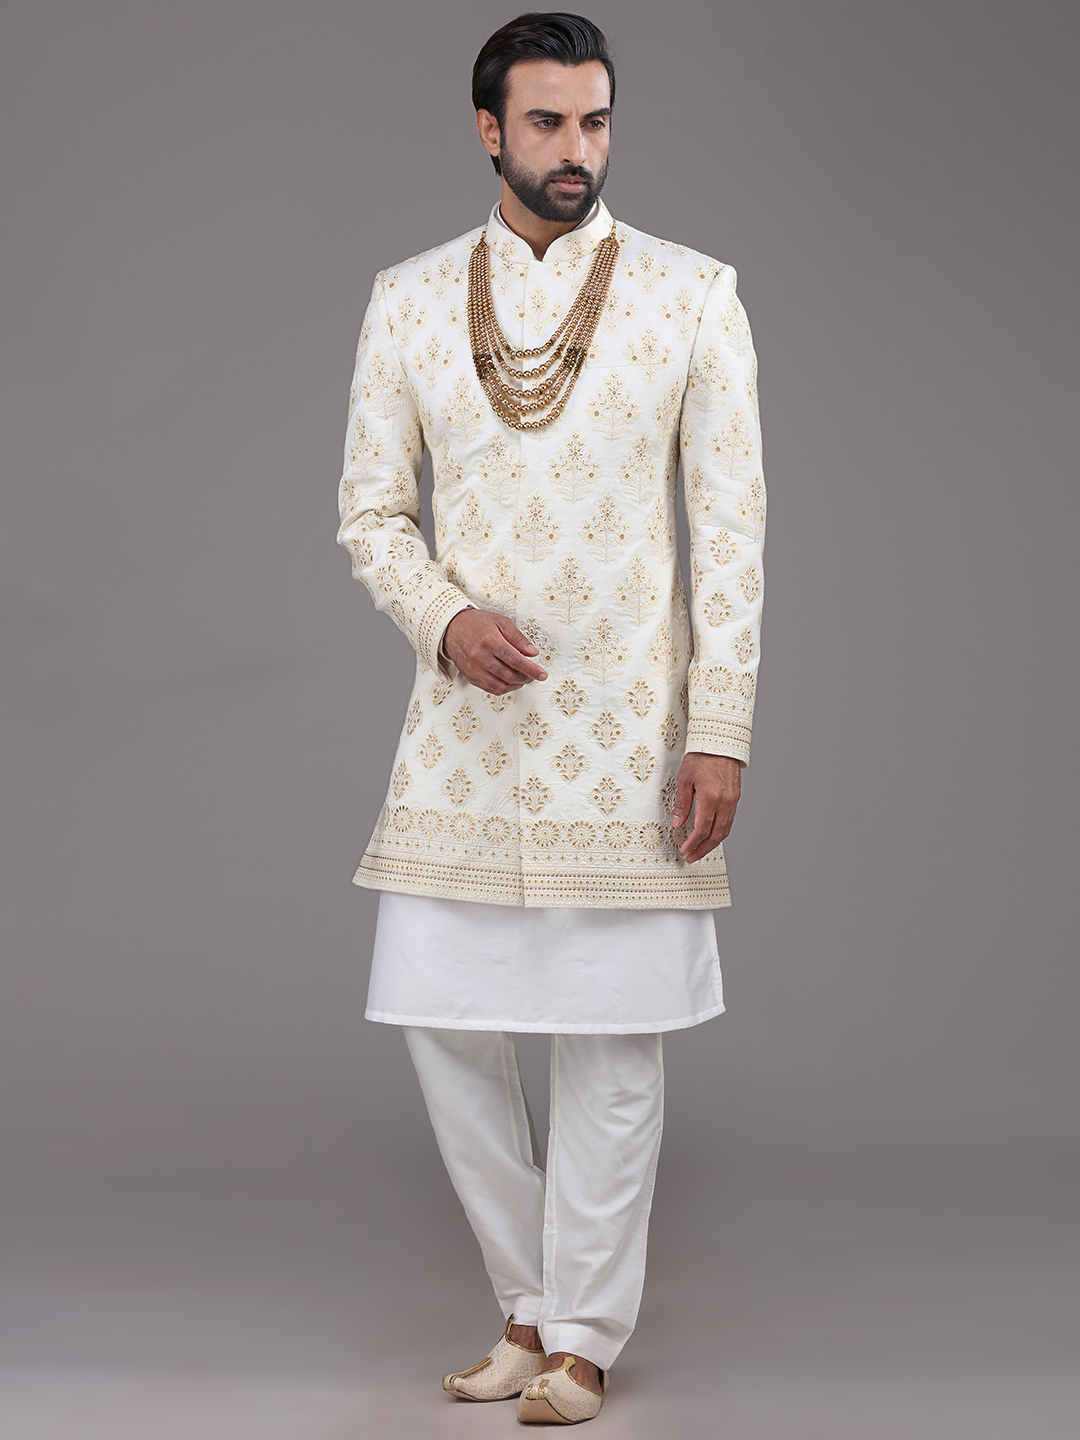 Mens wedding outfit, Indo western attire